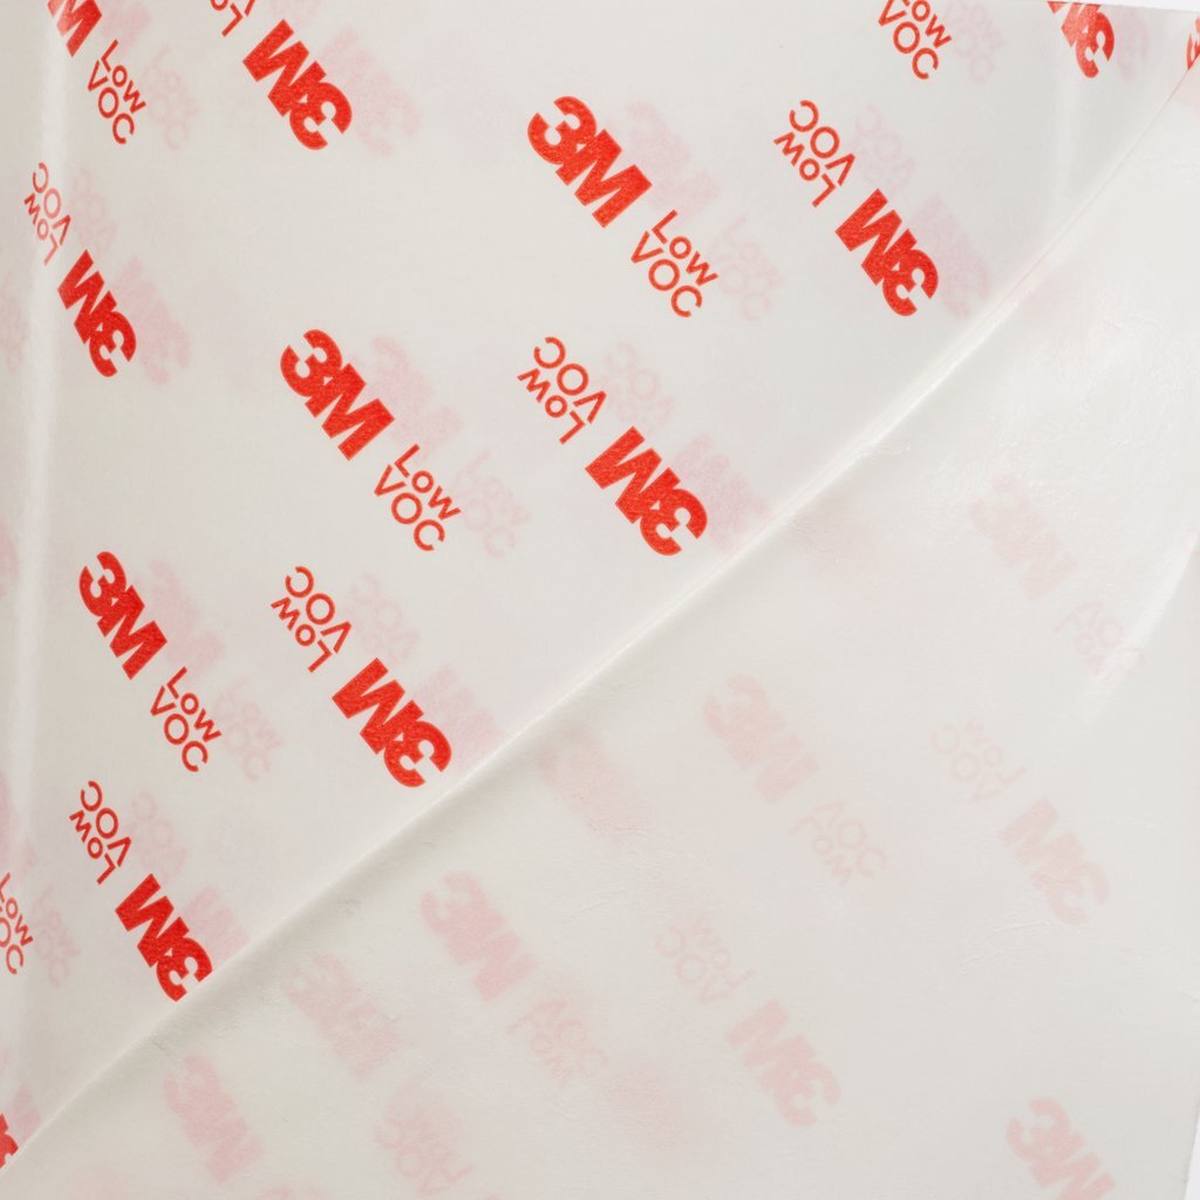 3M Dubbelzijdig plakband met vliespapier als rug 99015LVC, wit, 15 mm x 50 m, 0,15 mm